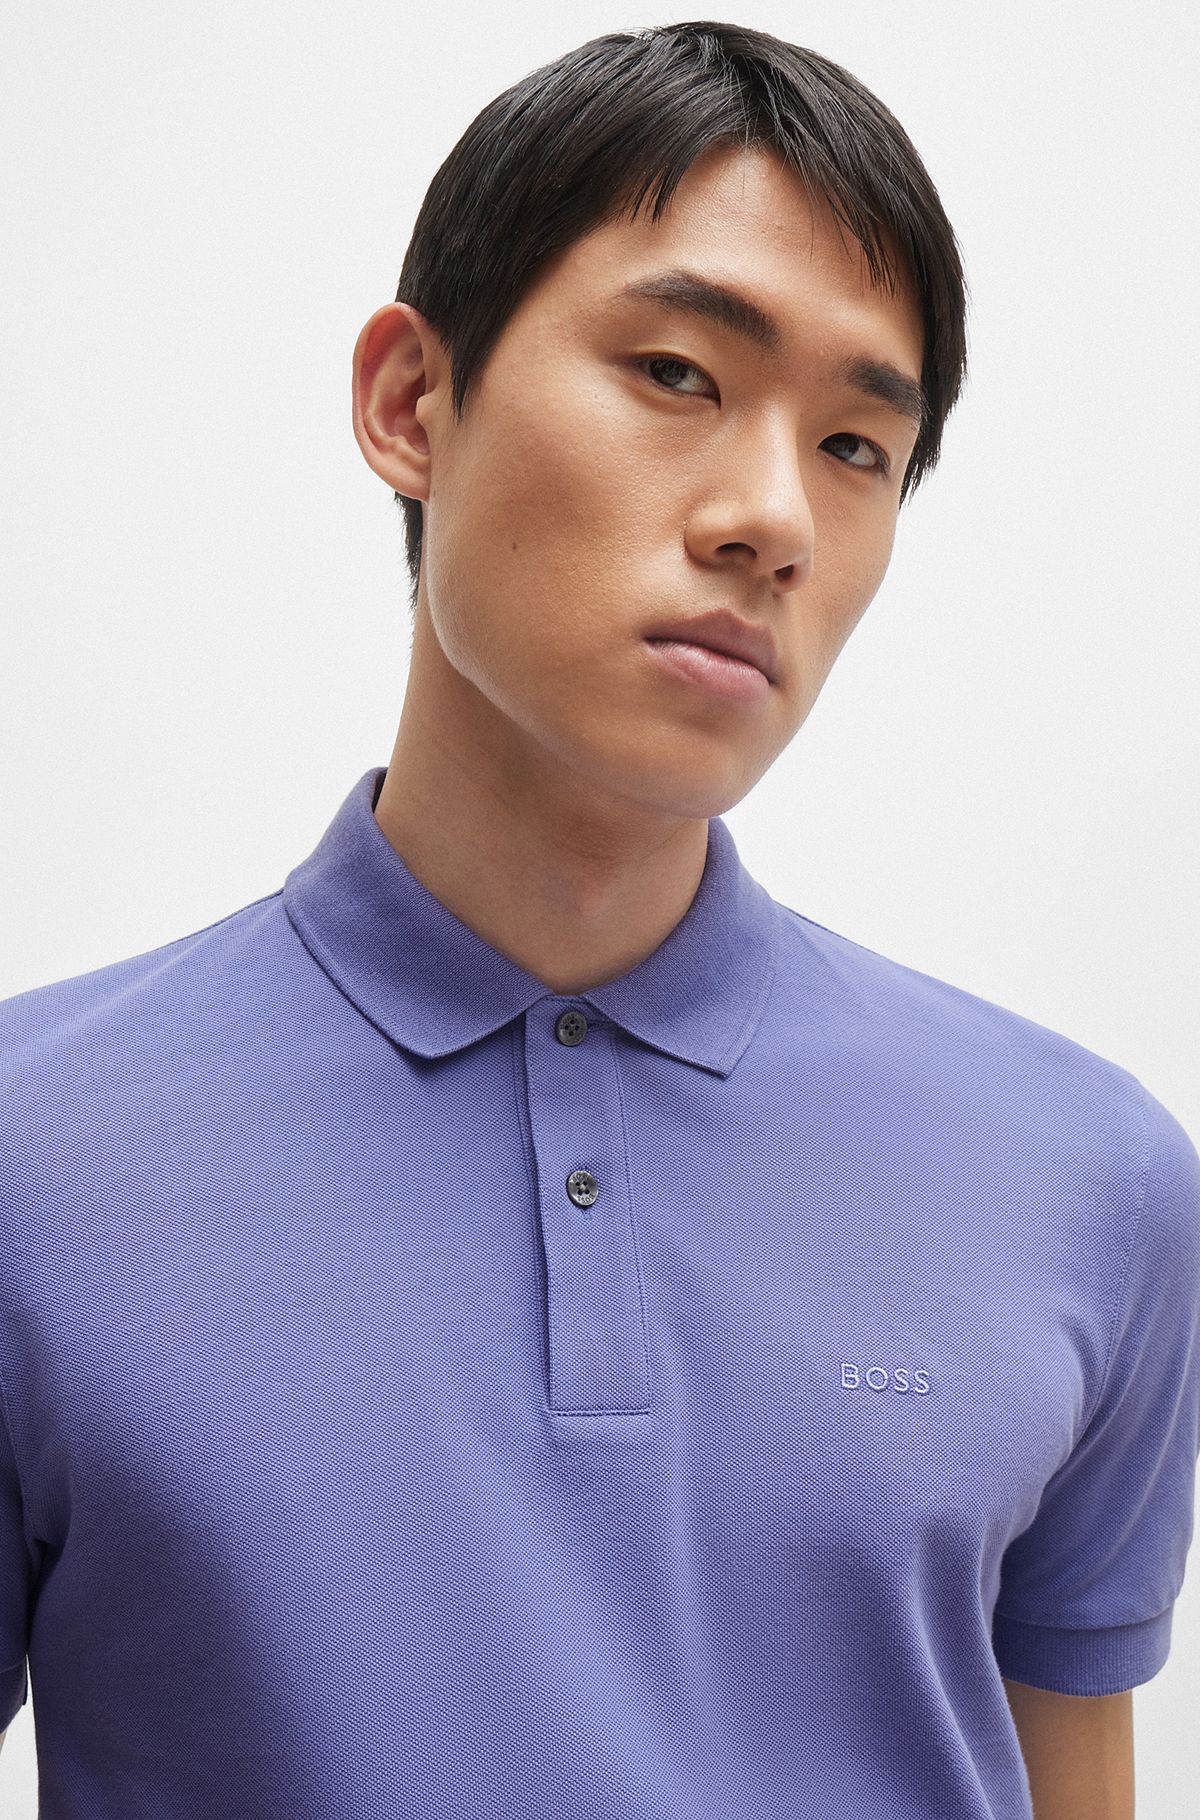 Polo Shirts in Purple by HUGO BOSS | Men